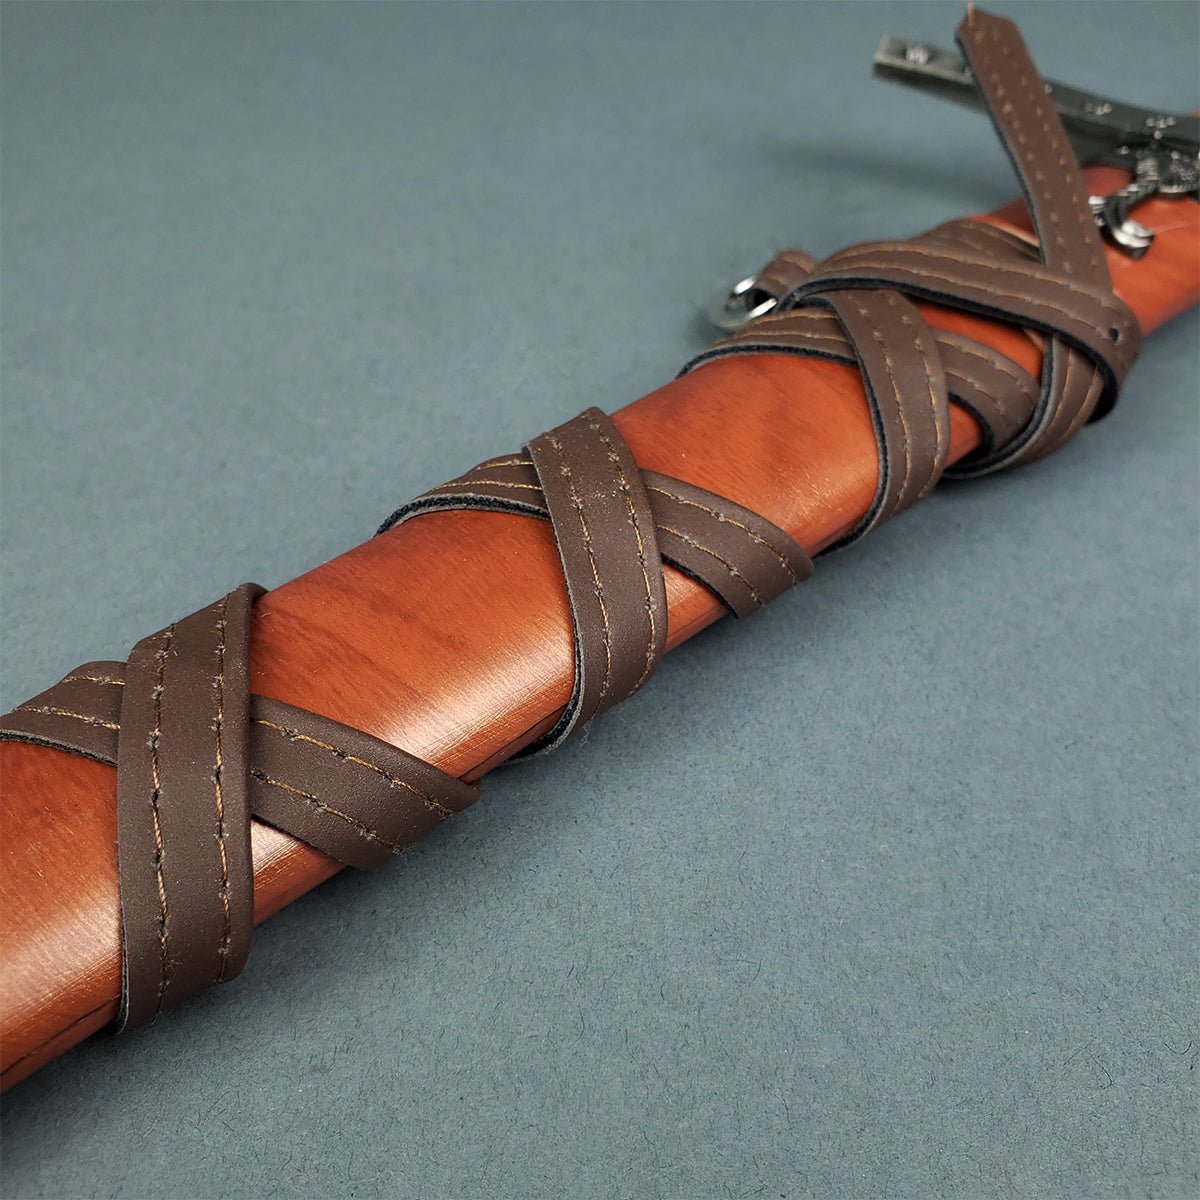 Buy Medieval Swords in Bulk - Wholesale Medieval Templar Swords